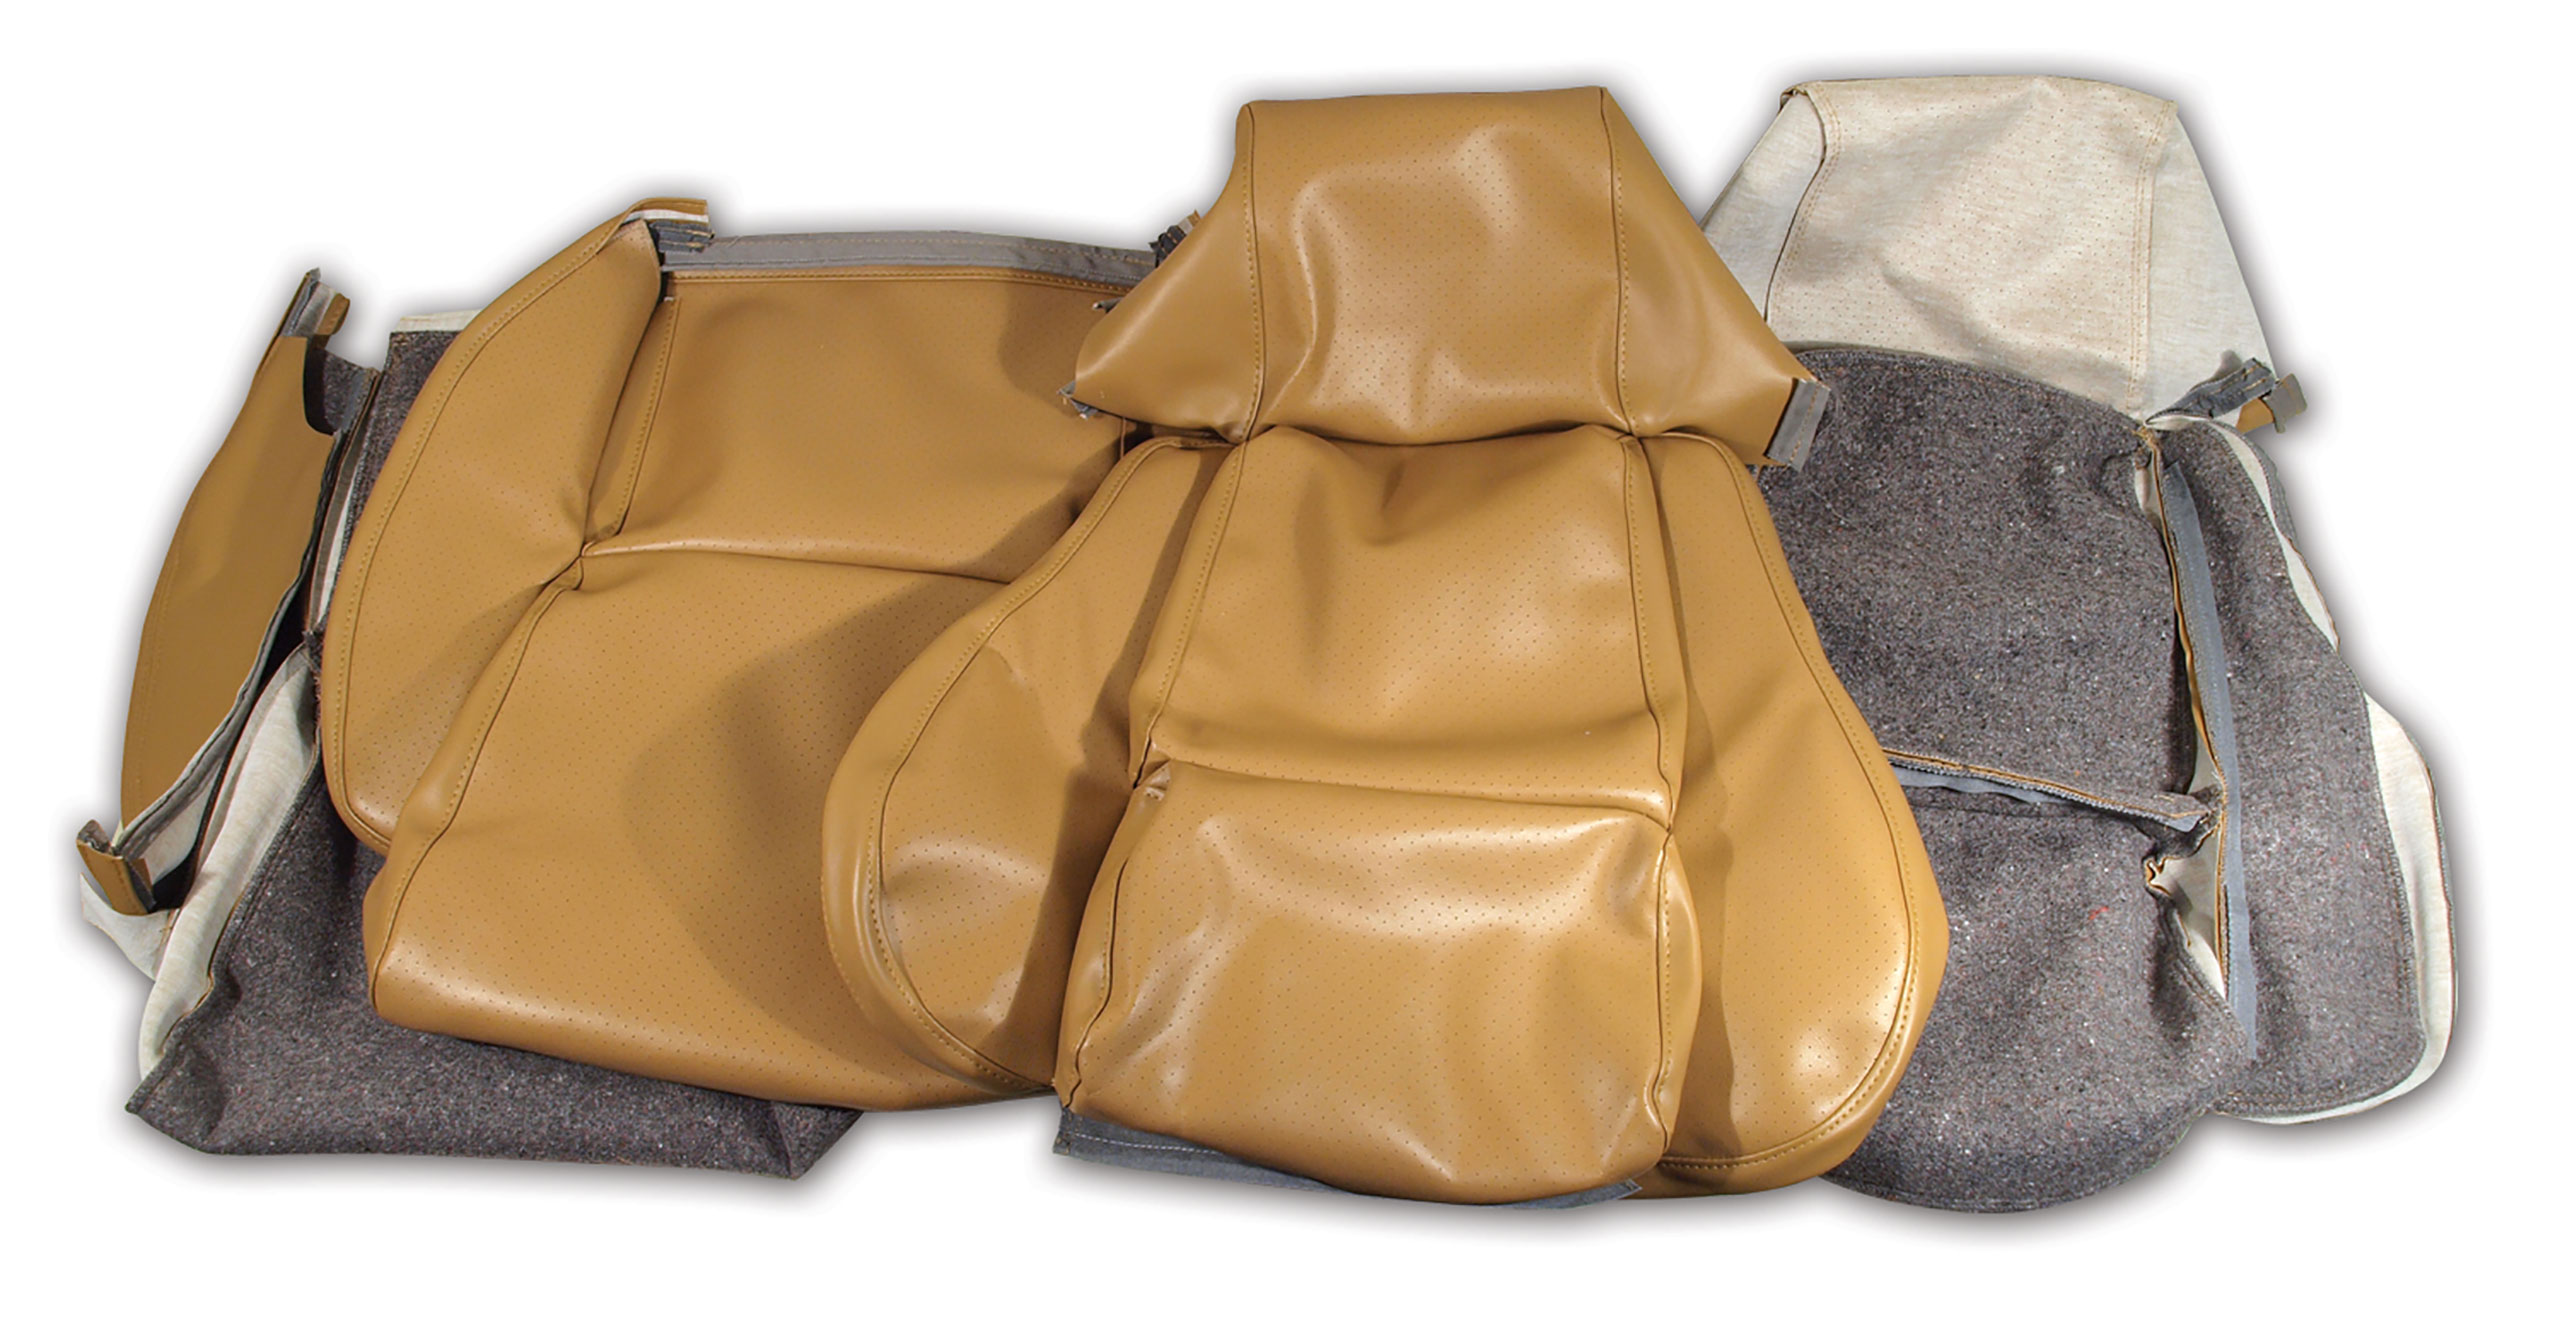 1984-1987 Corvette C4 "Leather-Like" Vinyl Seat Covers Saddle Standard CA-421872 